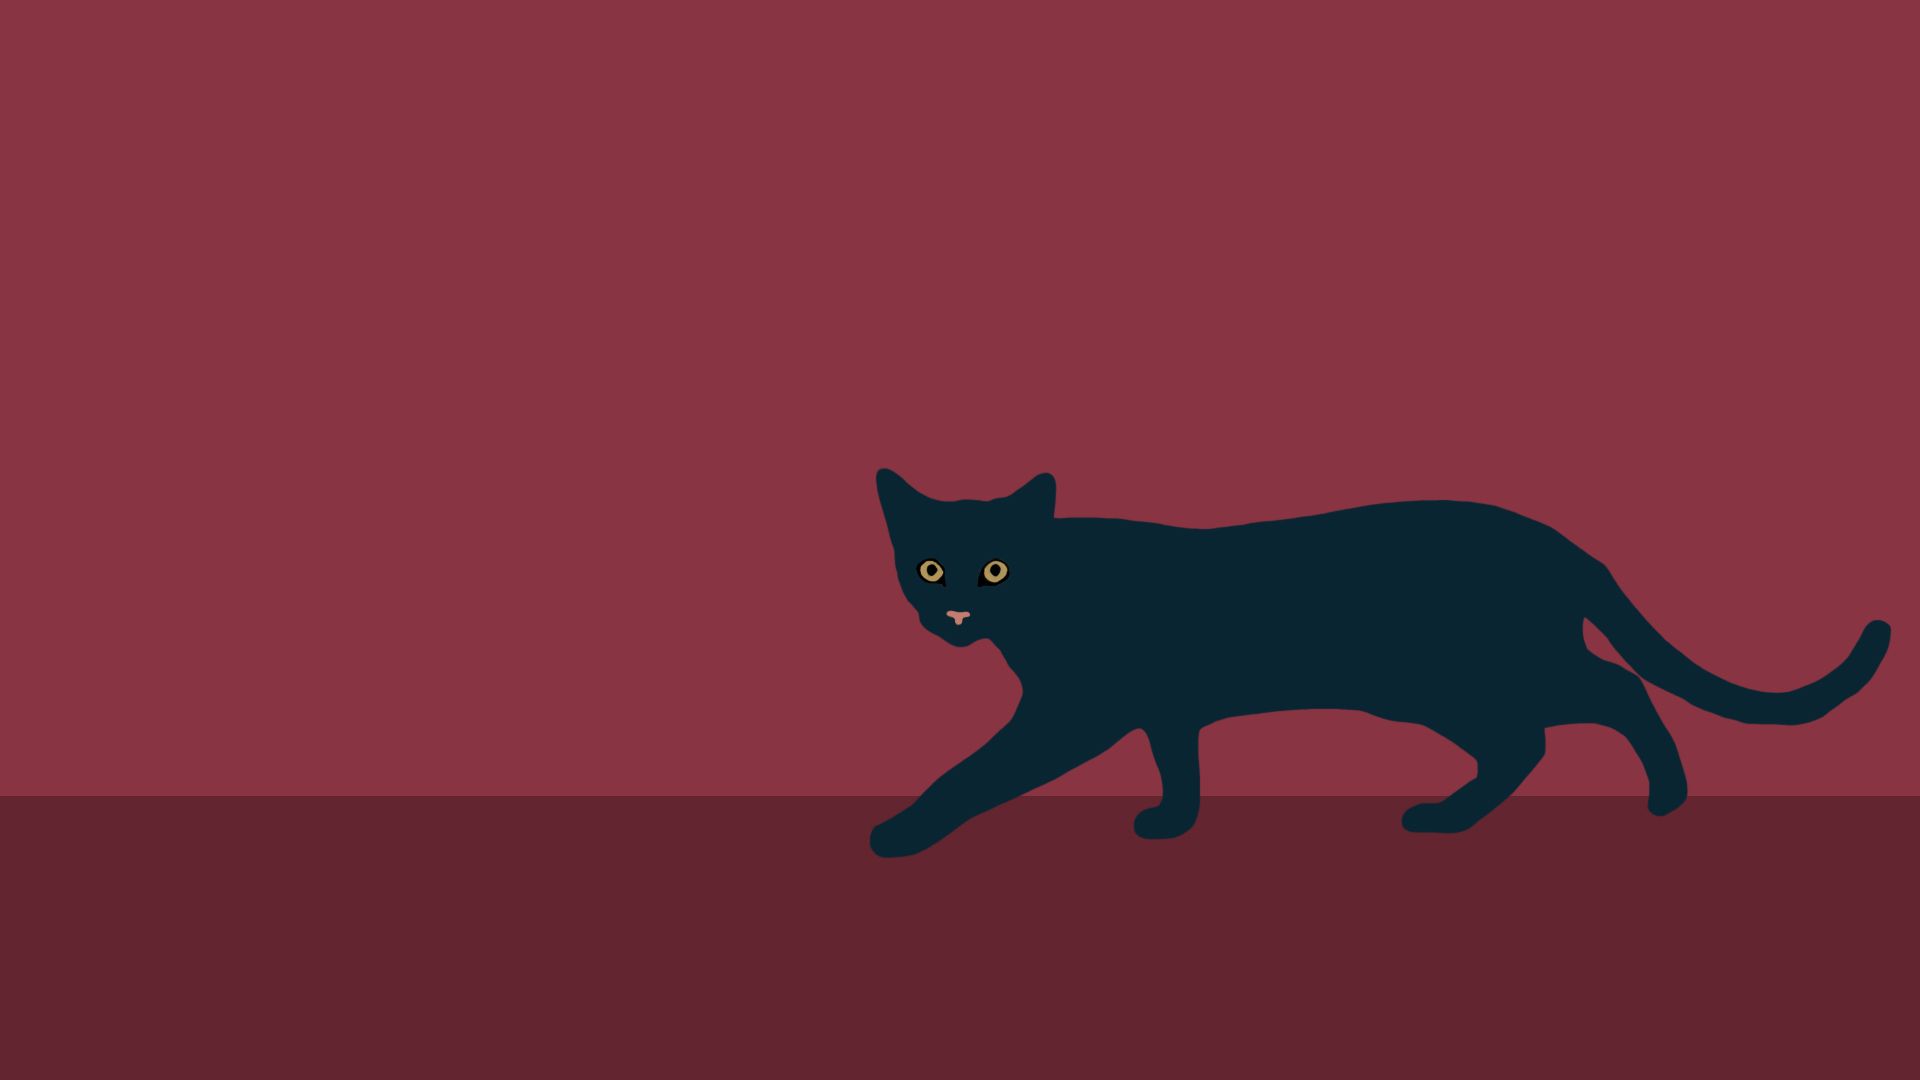 A black cat walking on the floor - Cat